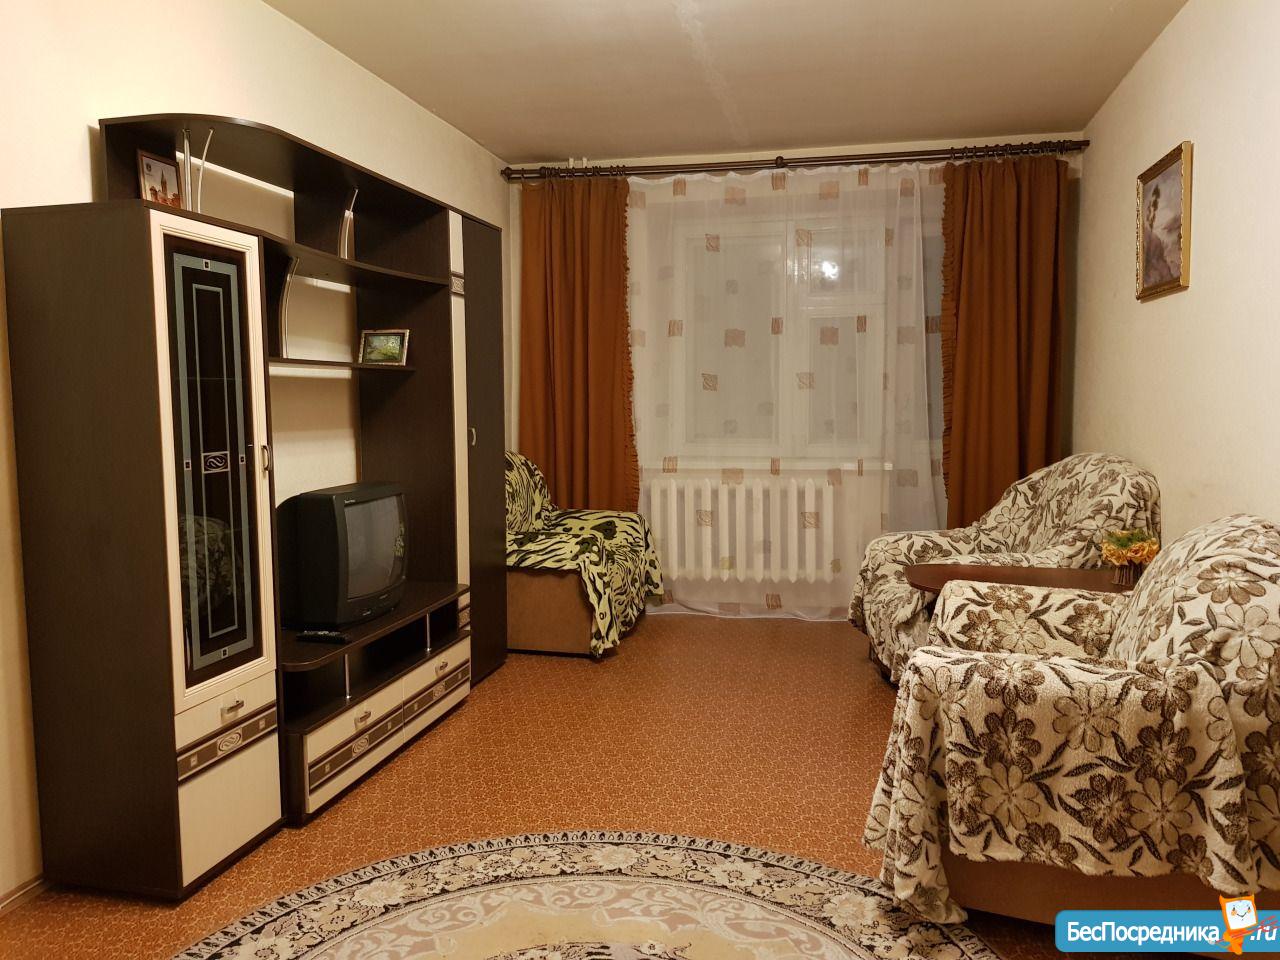 Купить квартиру в Томске без посредников